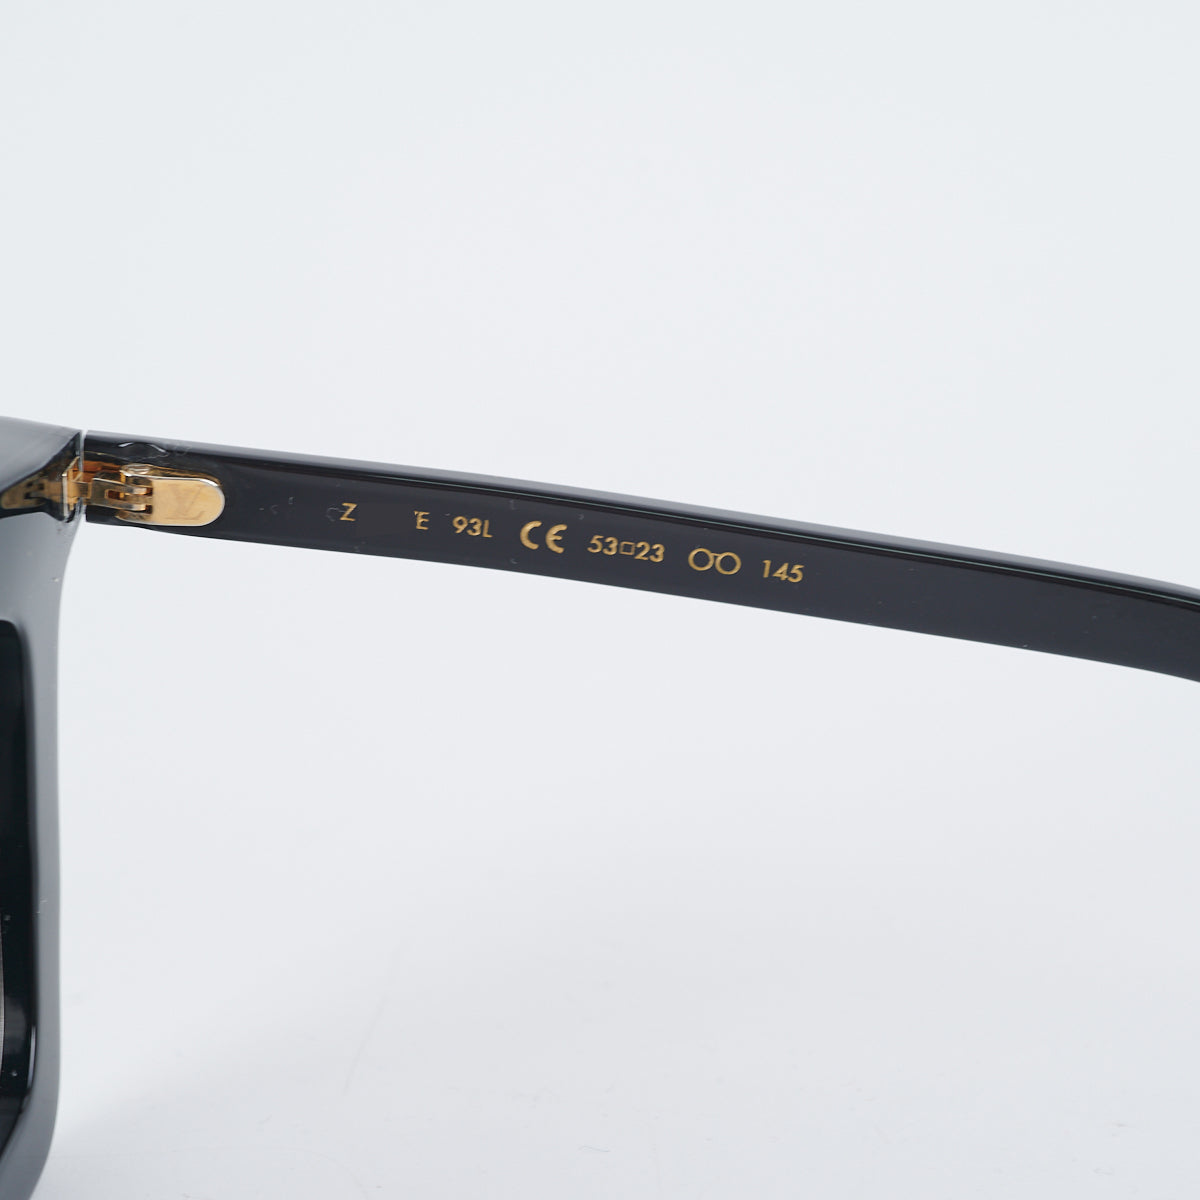 Louis Vuitton La grande Bellezza Sunglasses Black - THE PURSE AFFAIR